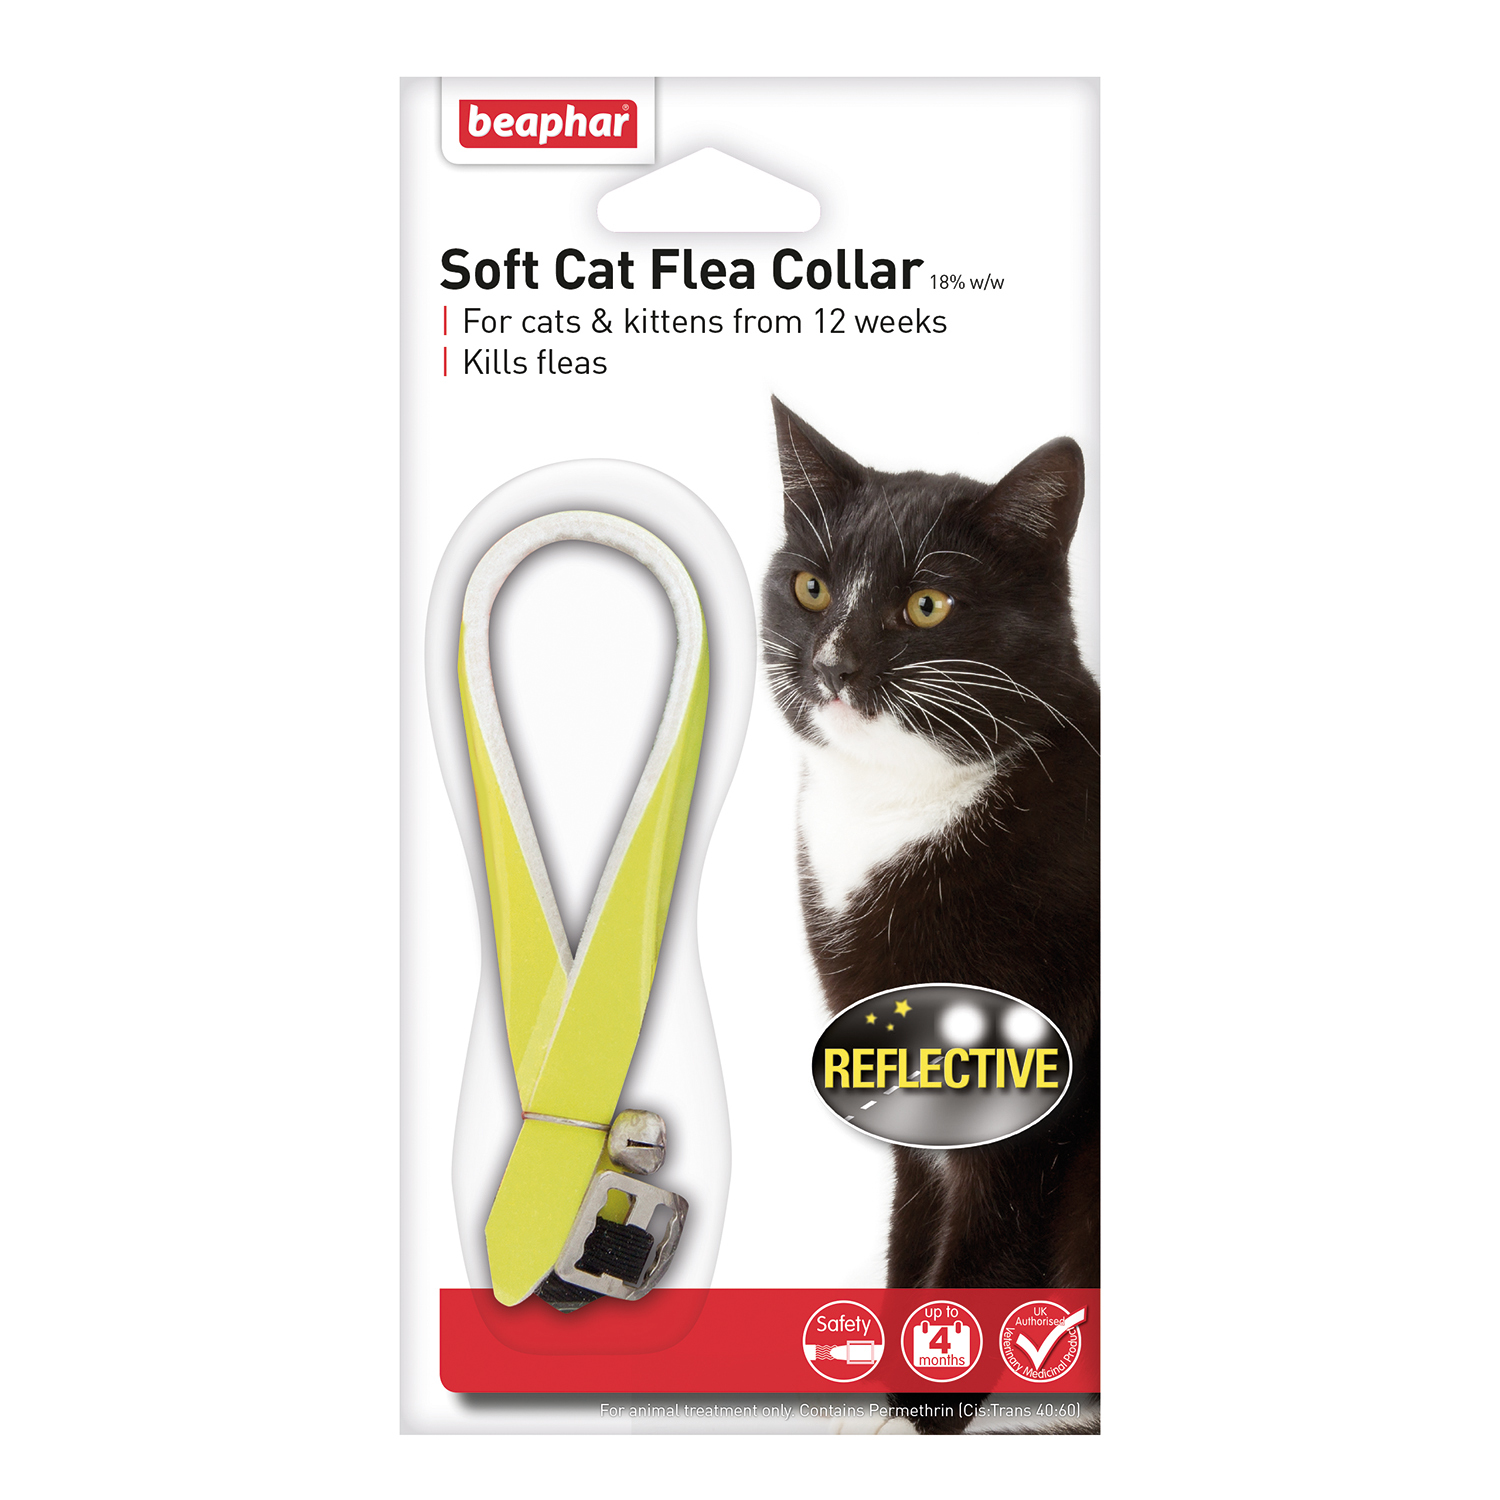 Beaphar 30cm Reflective Cat Flea Collar Image